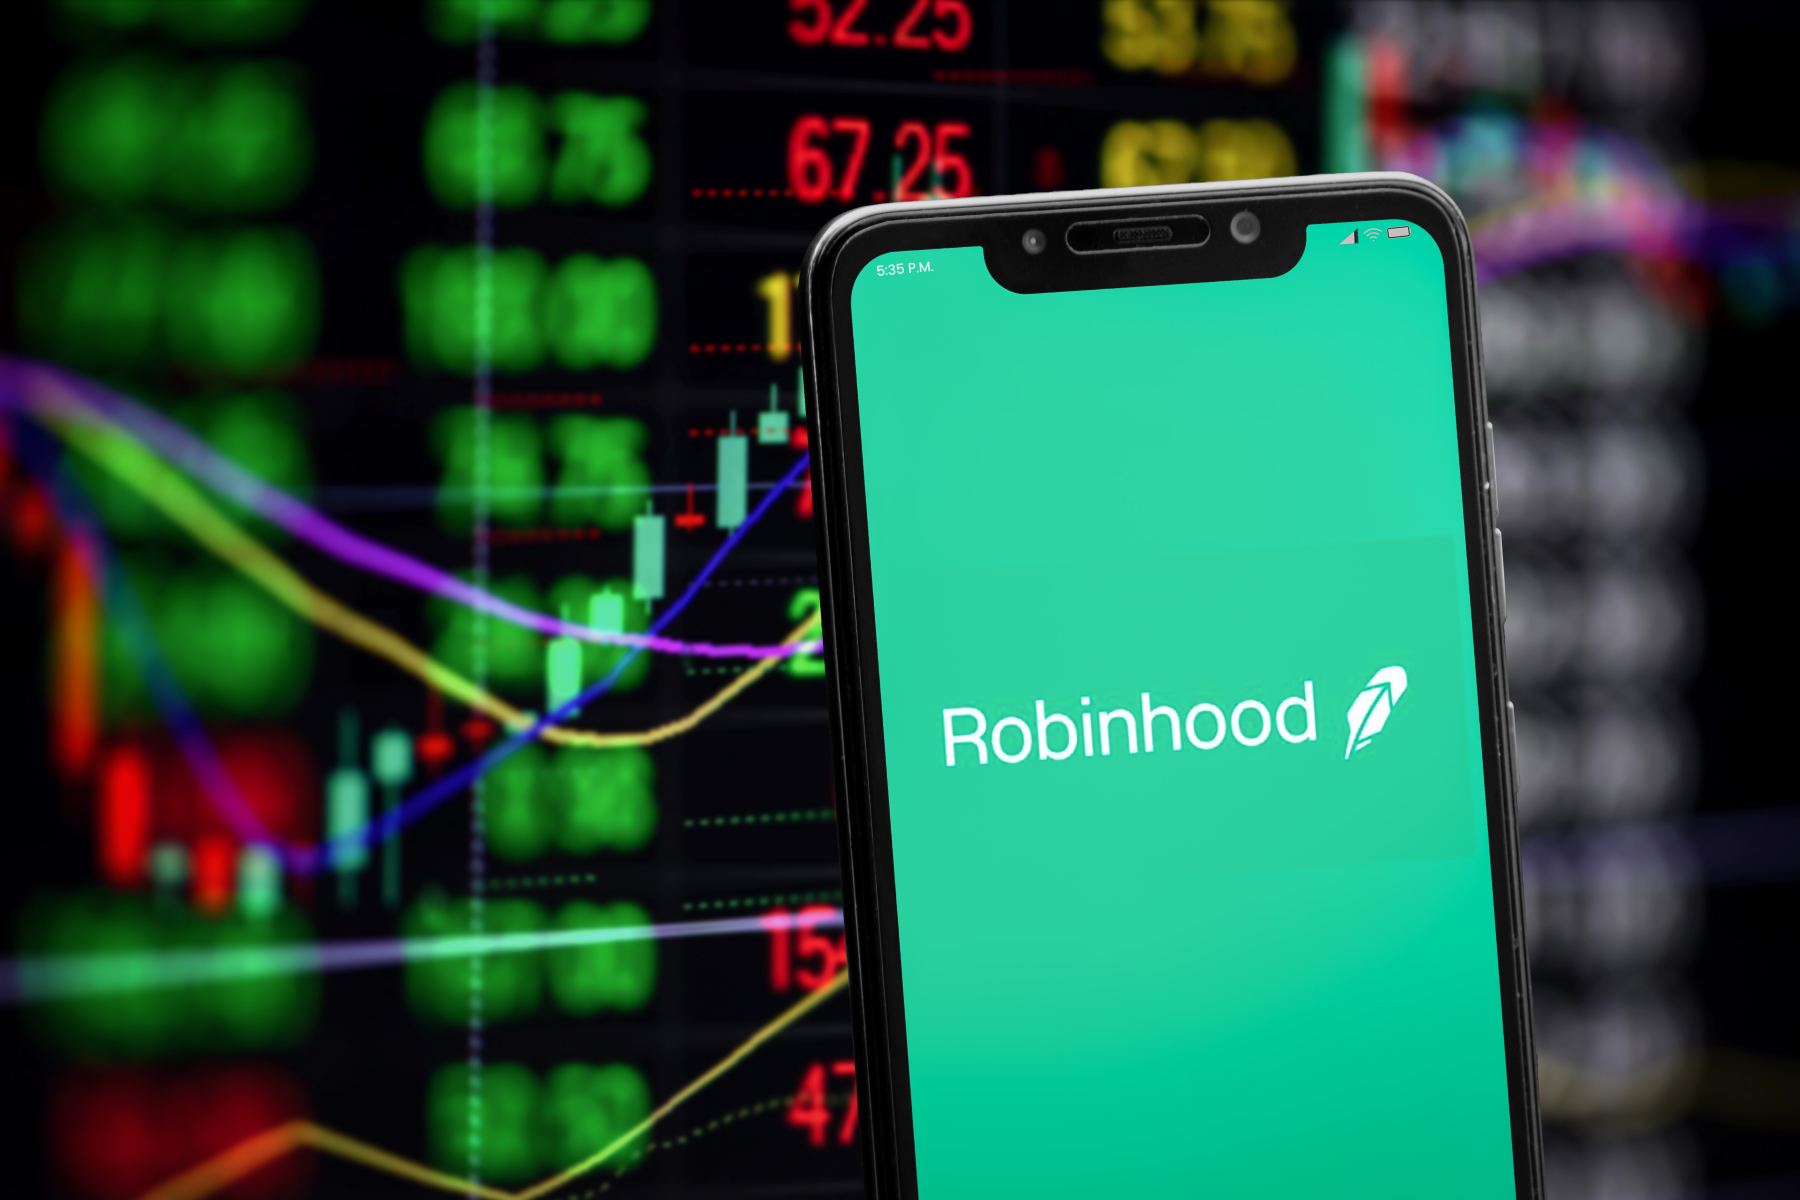 Robinhood Stops Trading Bitcoin SV - Price Crashes
